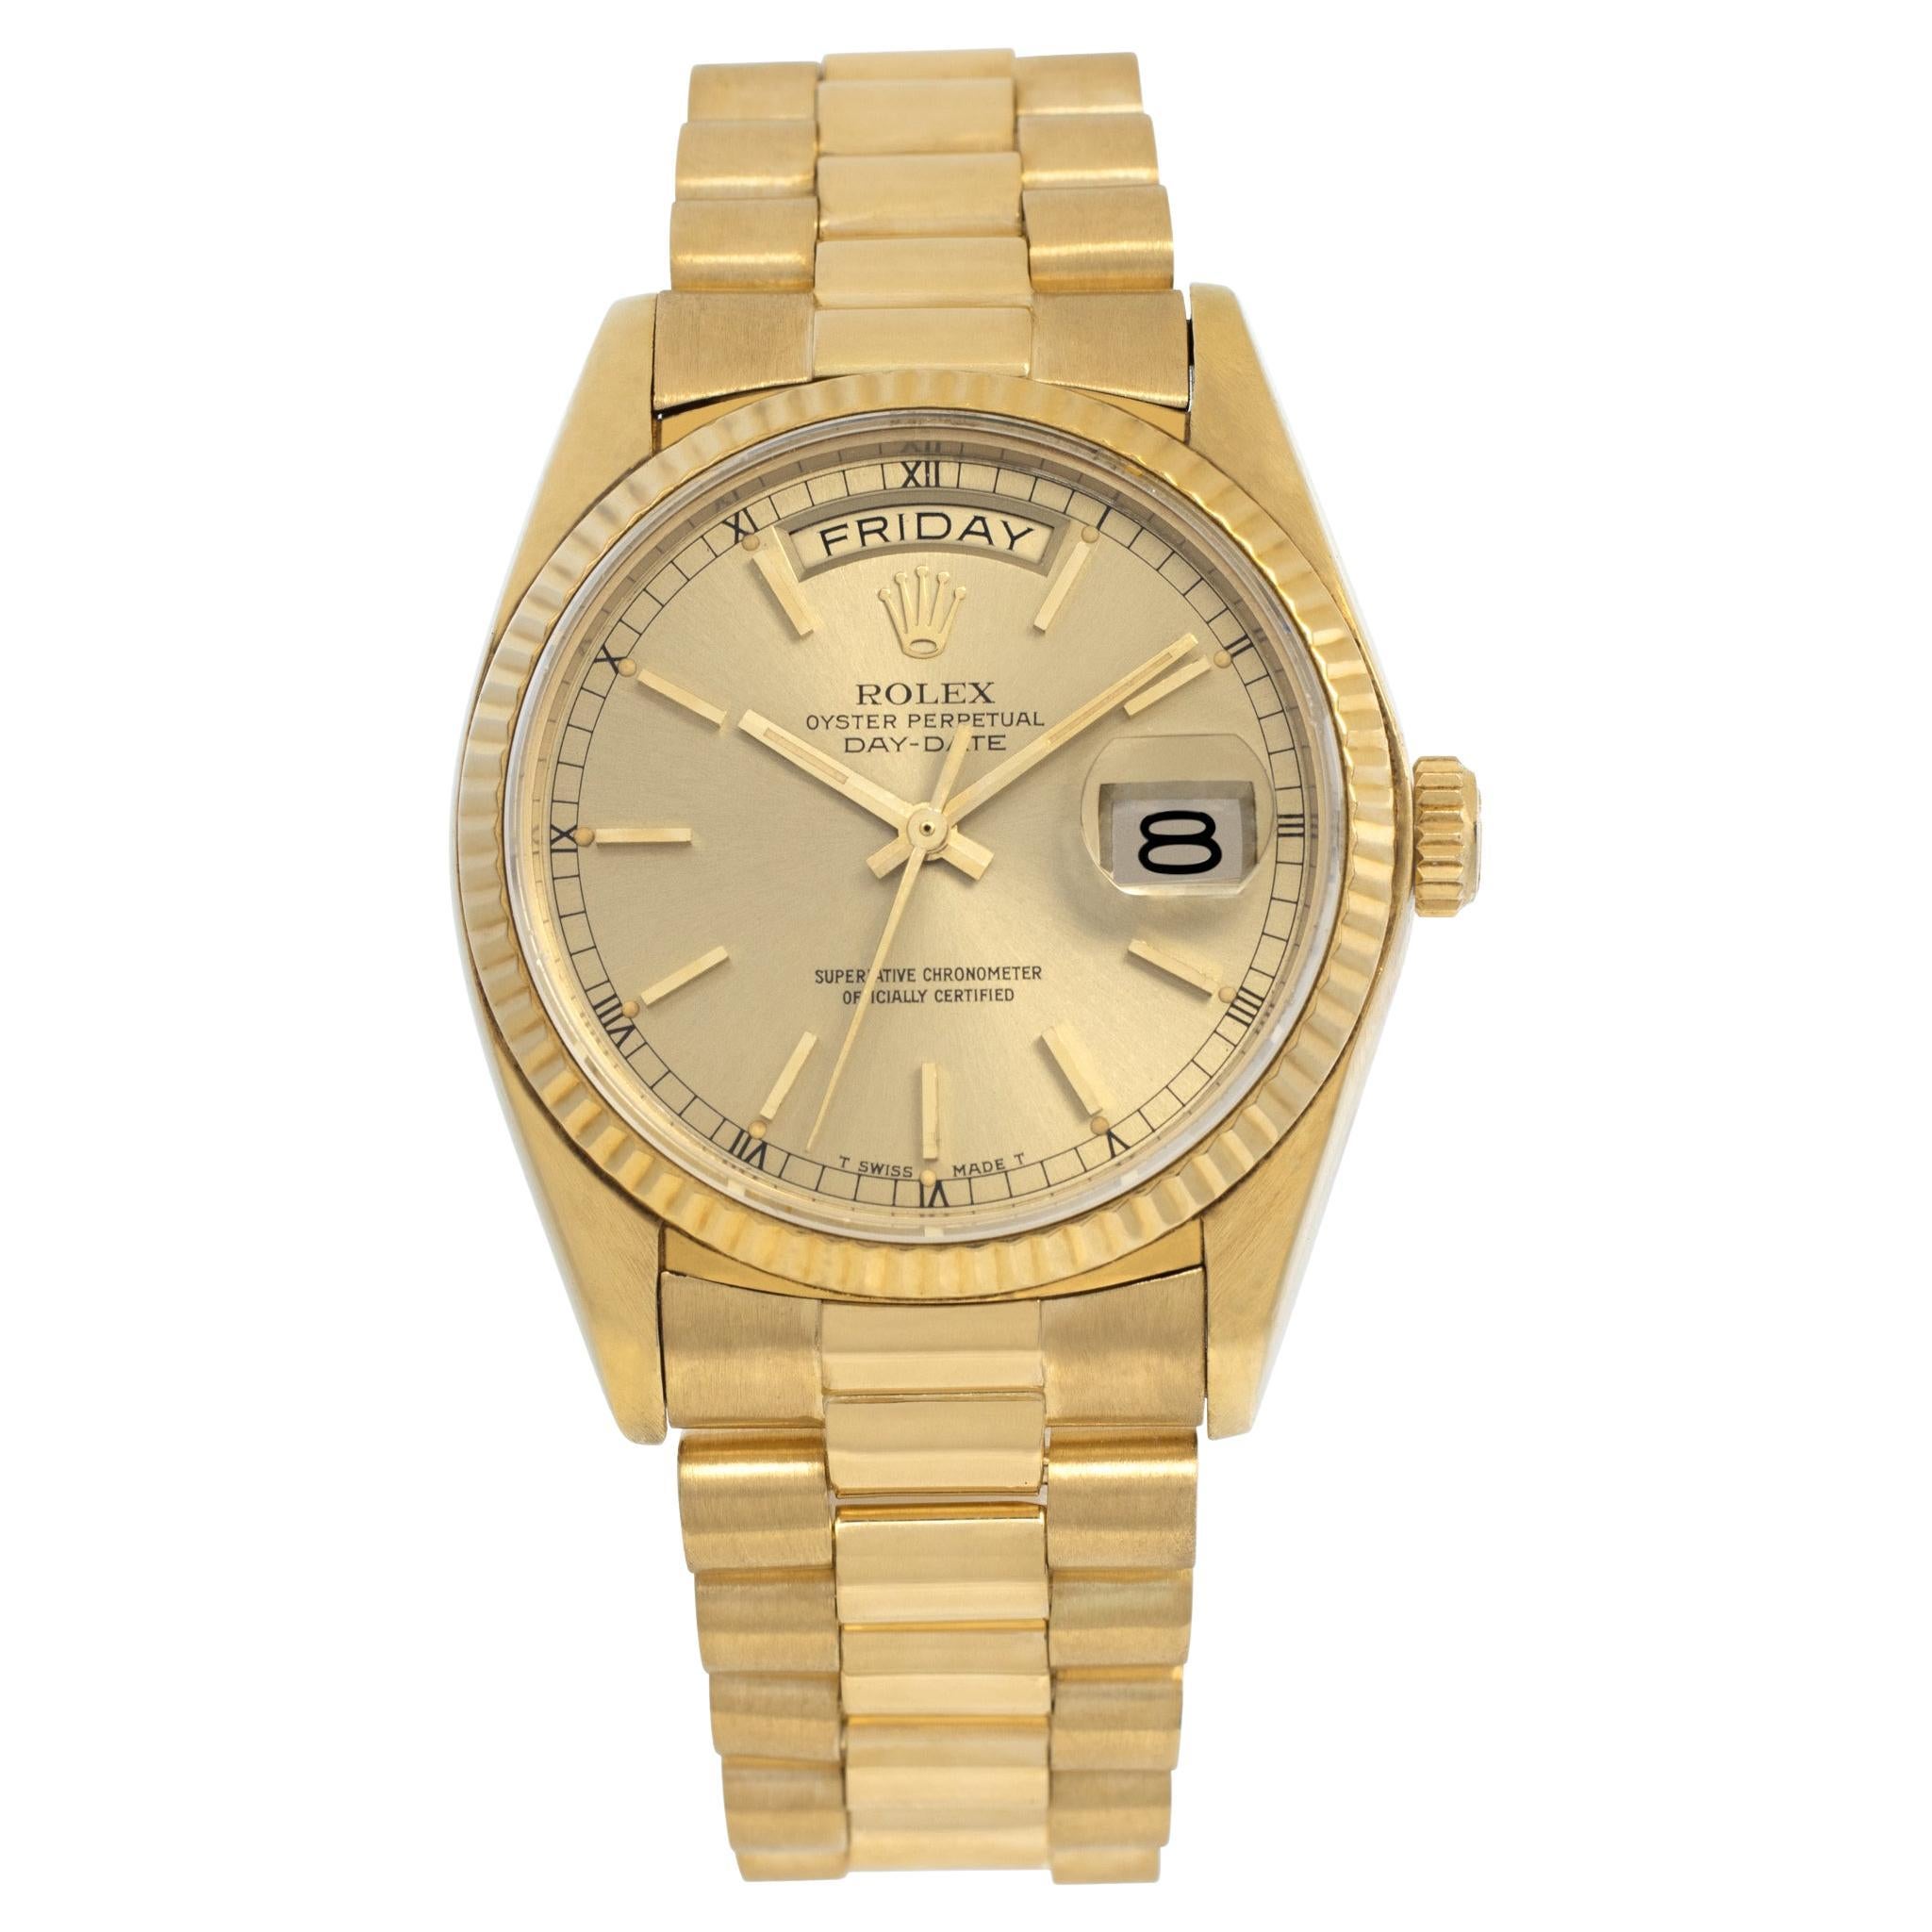 Rolex Day-Date 18k Yellow Gold Wristwatch Ref 18038